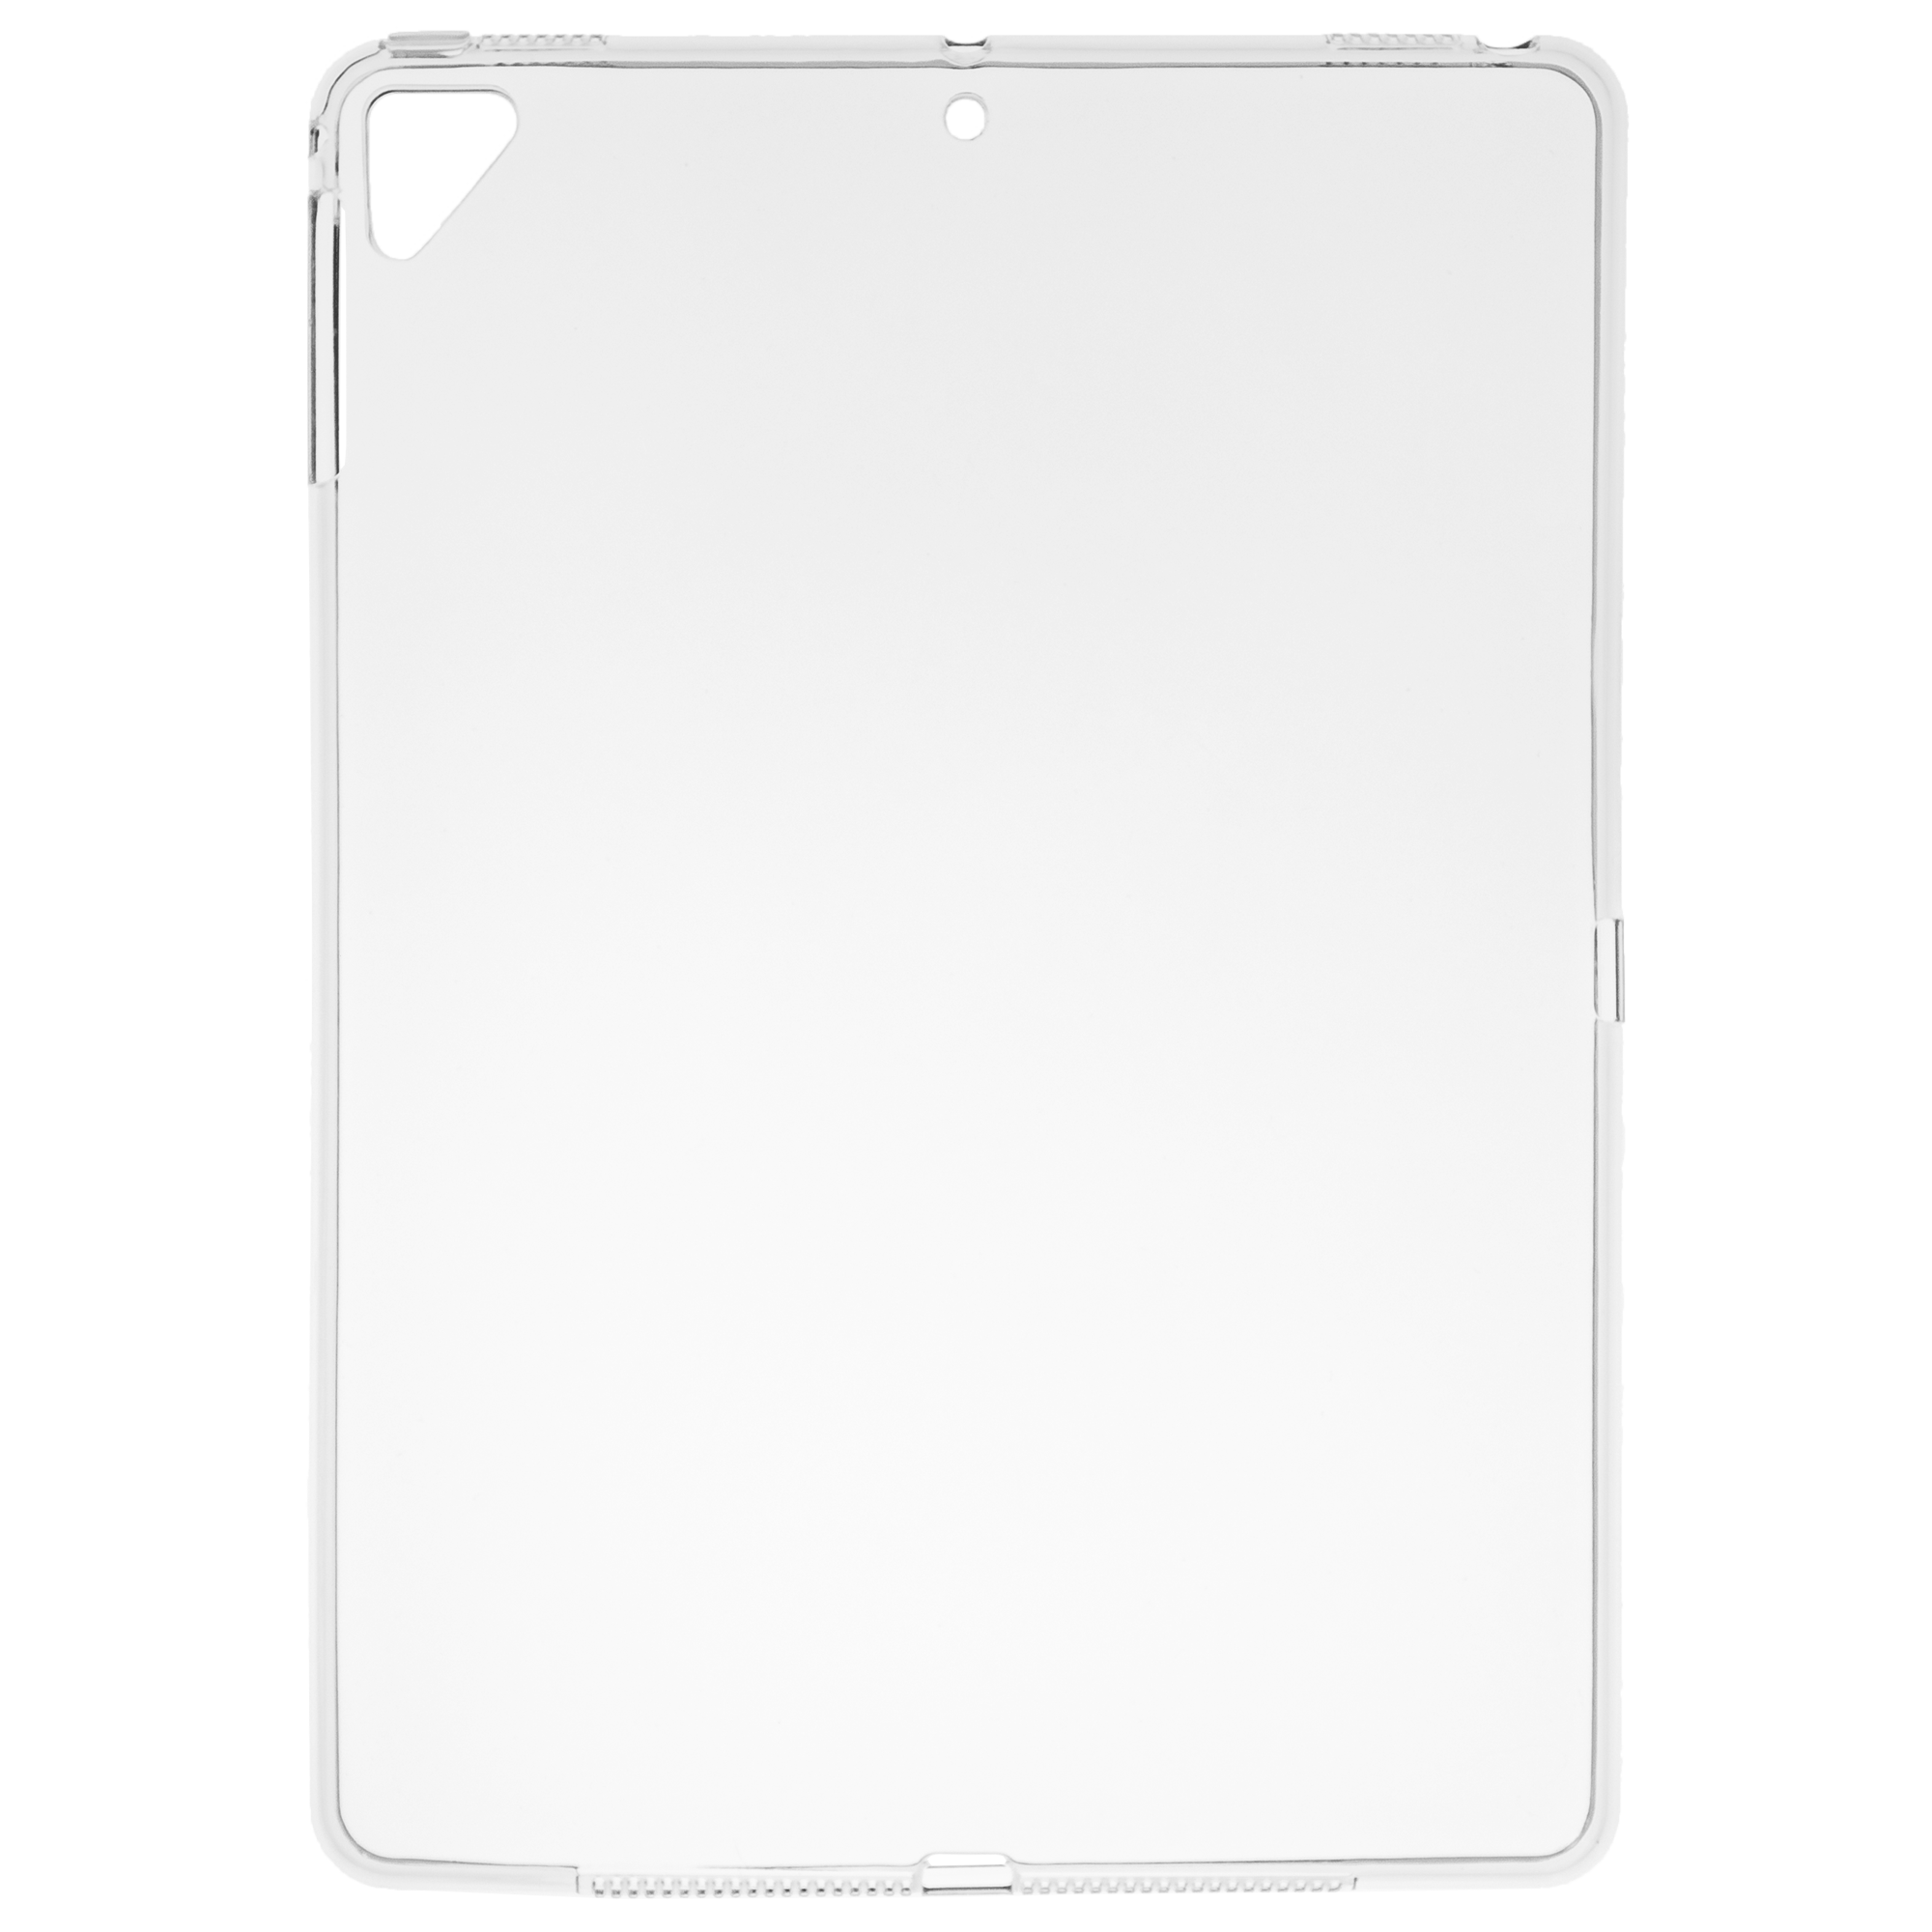 krater Leuren Herziening Acrylic TPU iPad Pro (2016) 9,7-inch hoesje kopen? - Morgen in huis | Partly